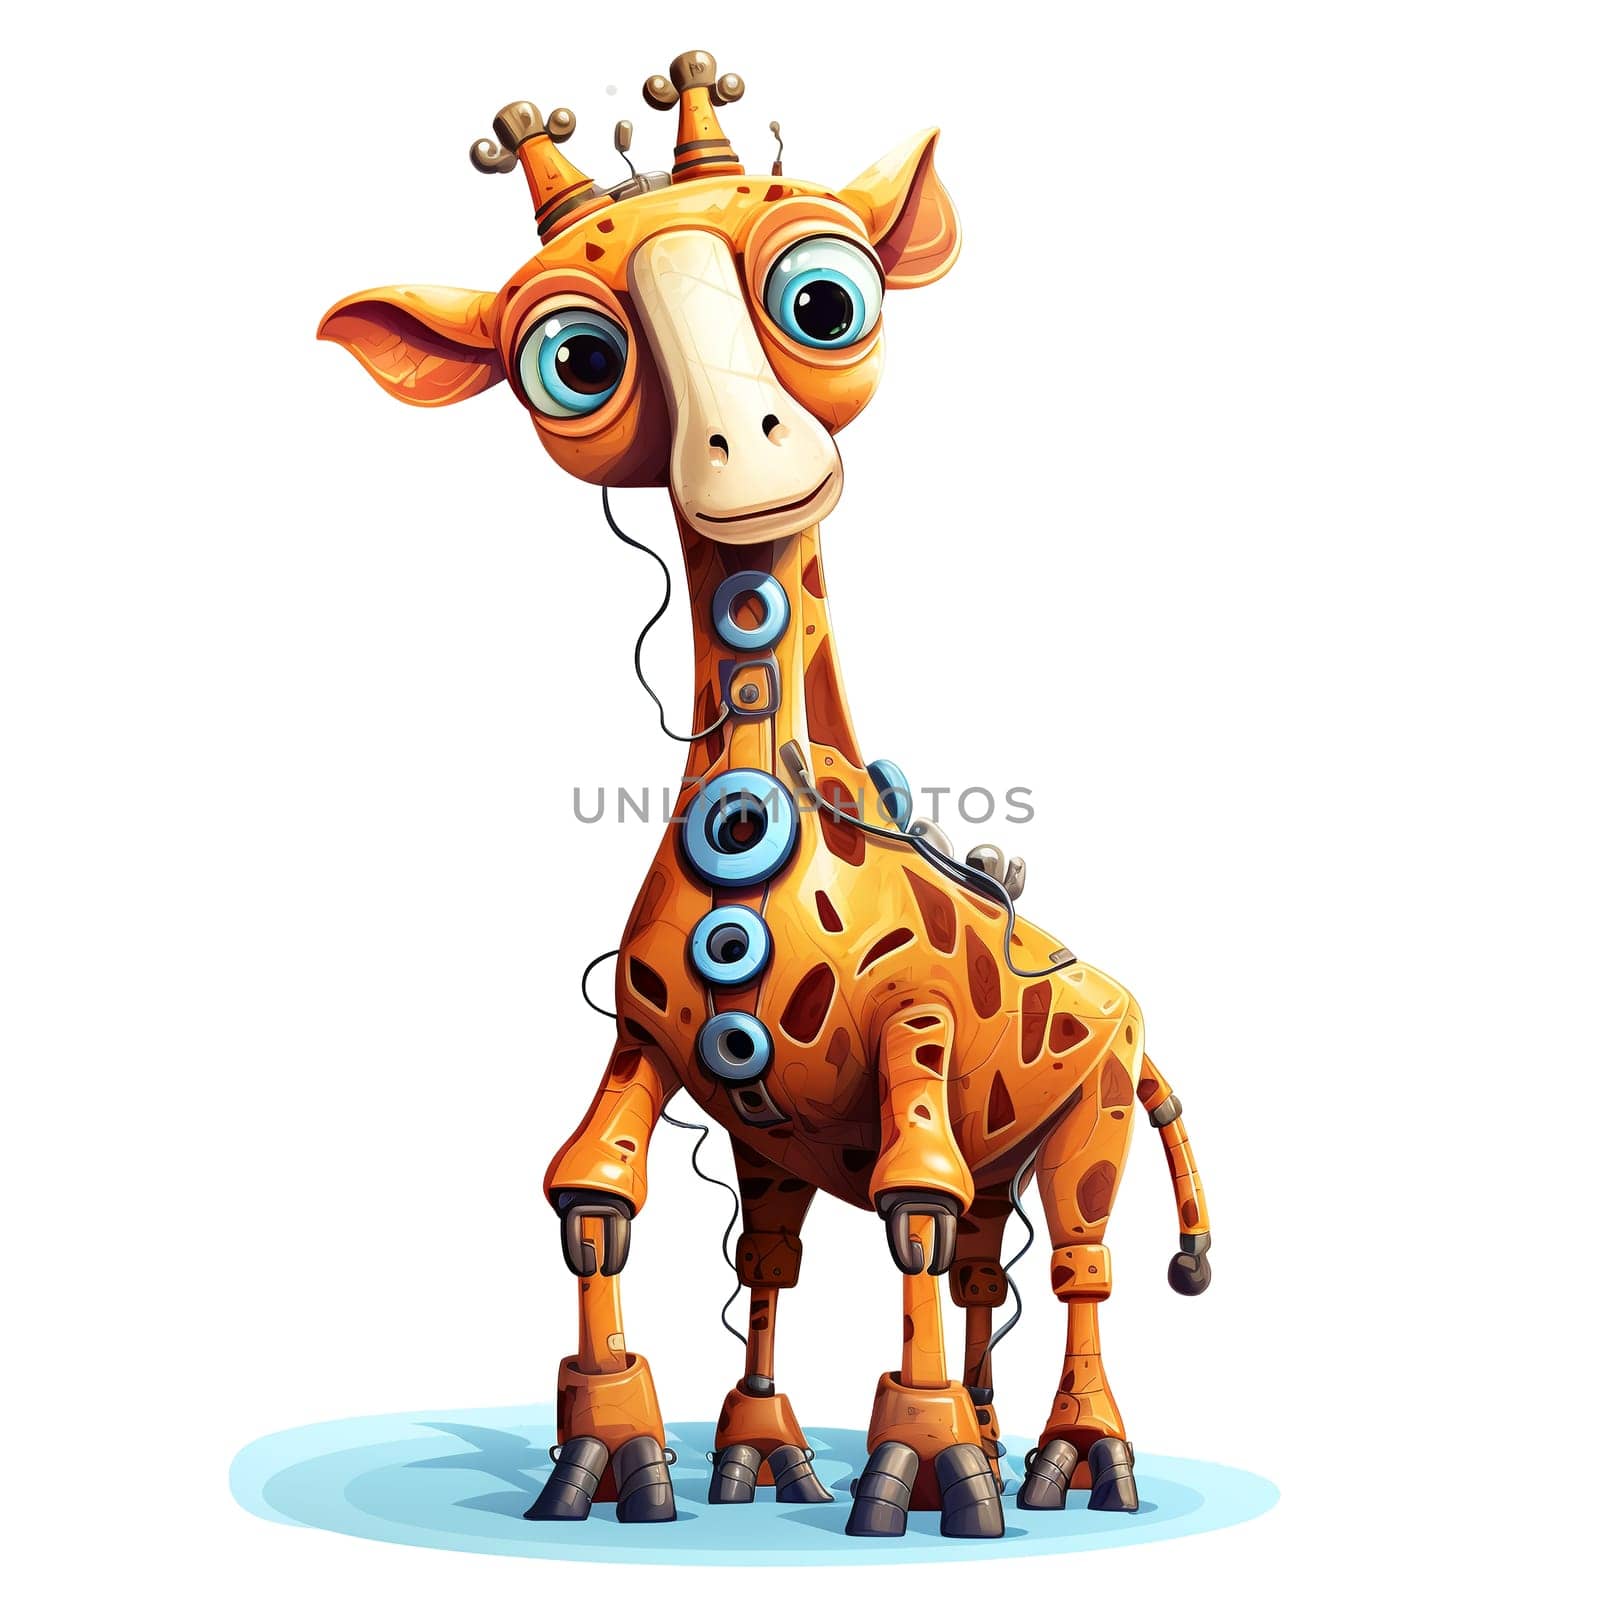 Cartoon giraffe robots. T-Shirt, Sticker. Funny cyborg. 